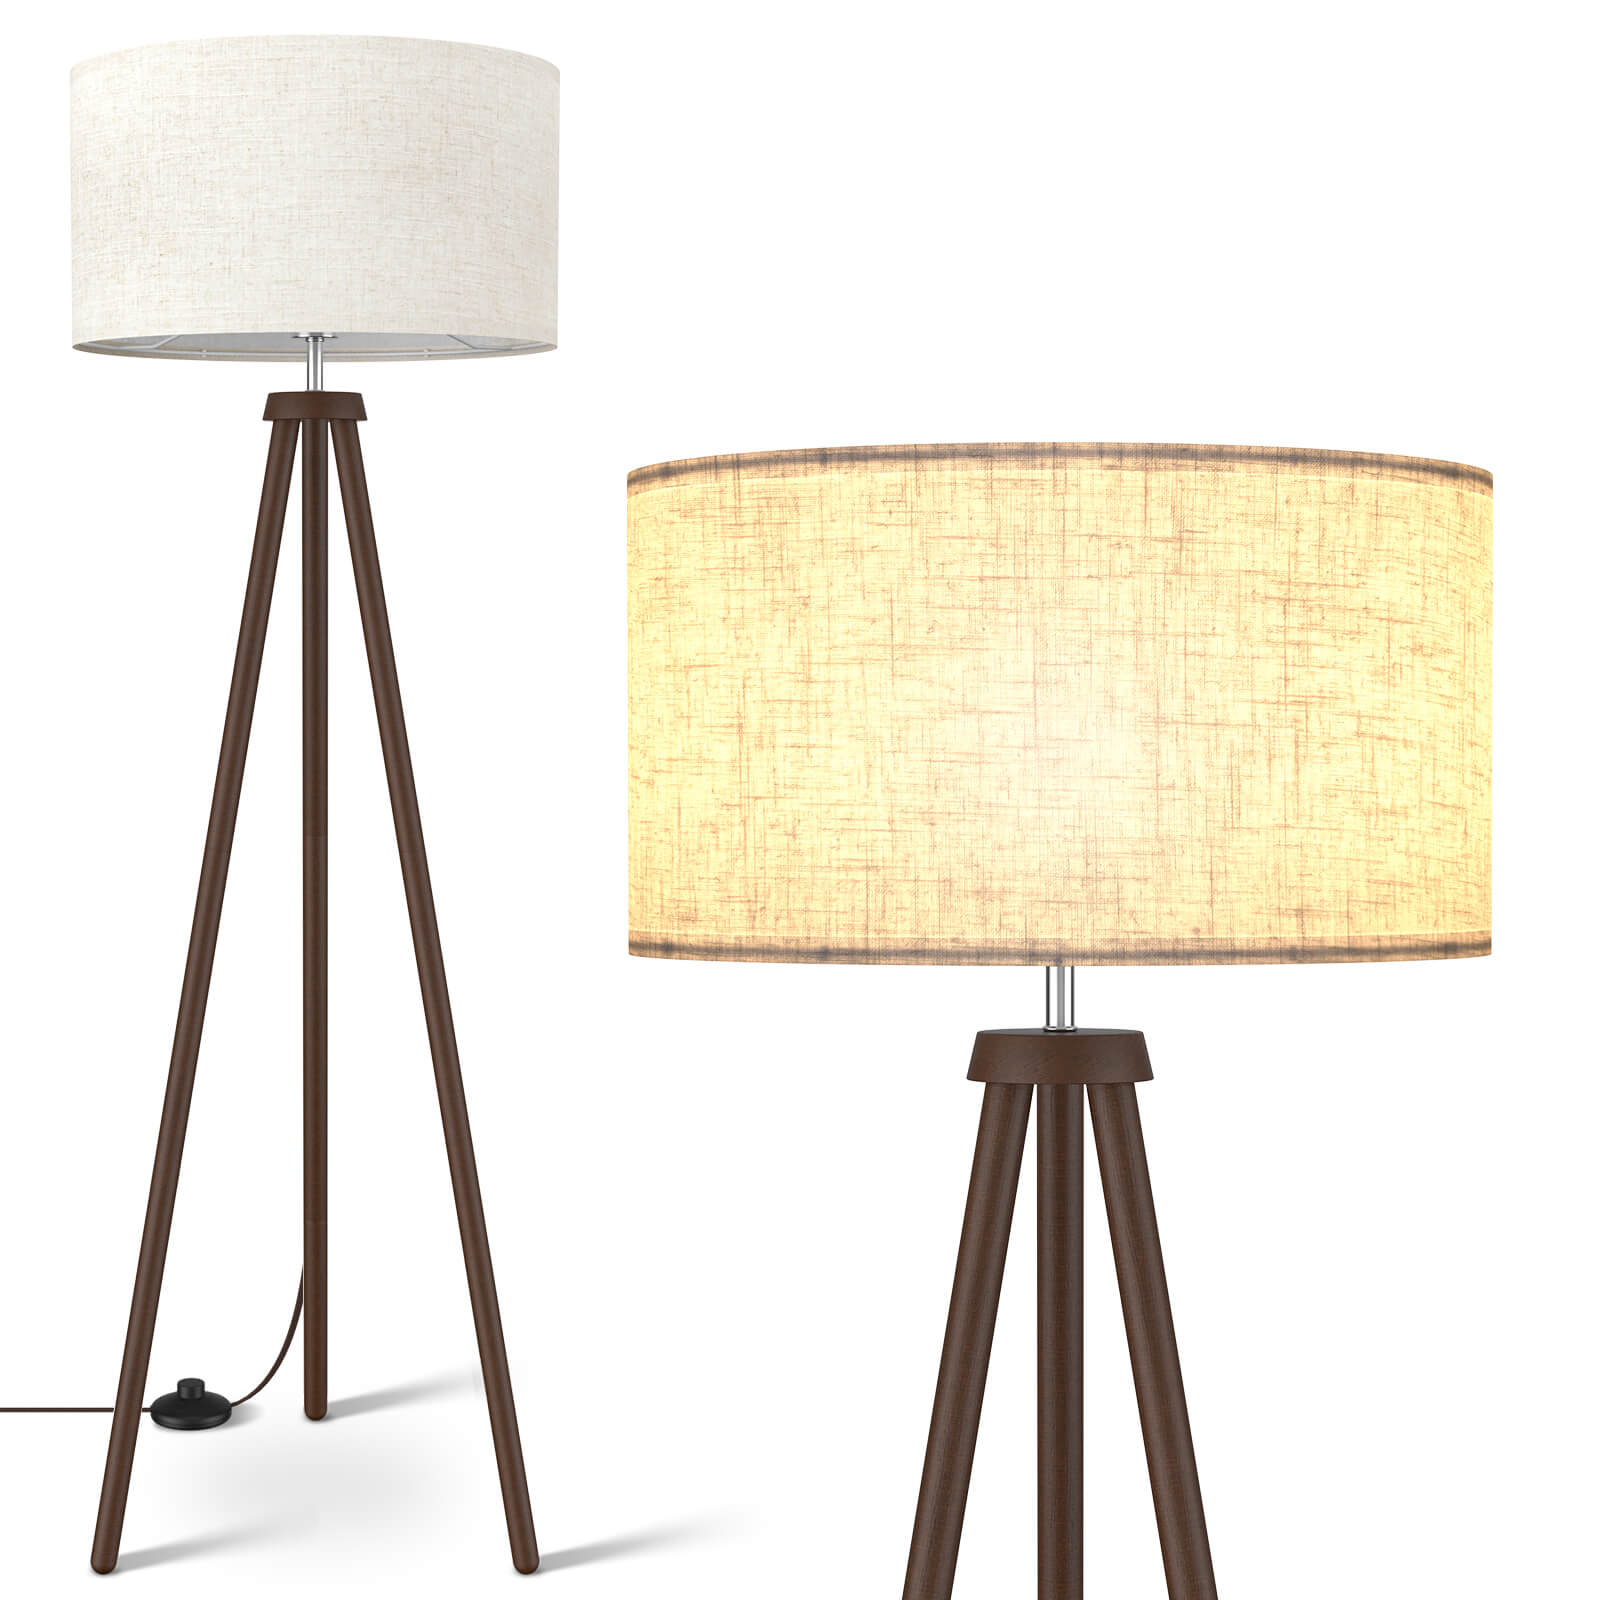 Wooden Tripod Floor Lamp, Modern Standing Lamp